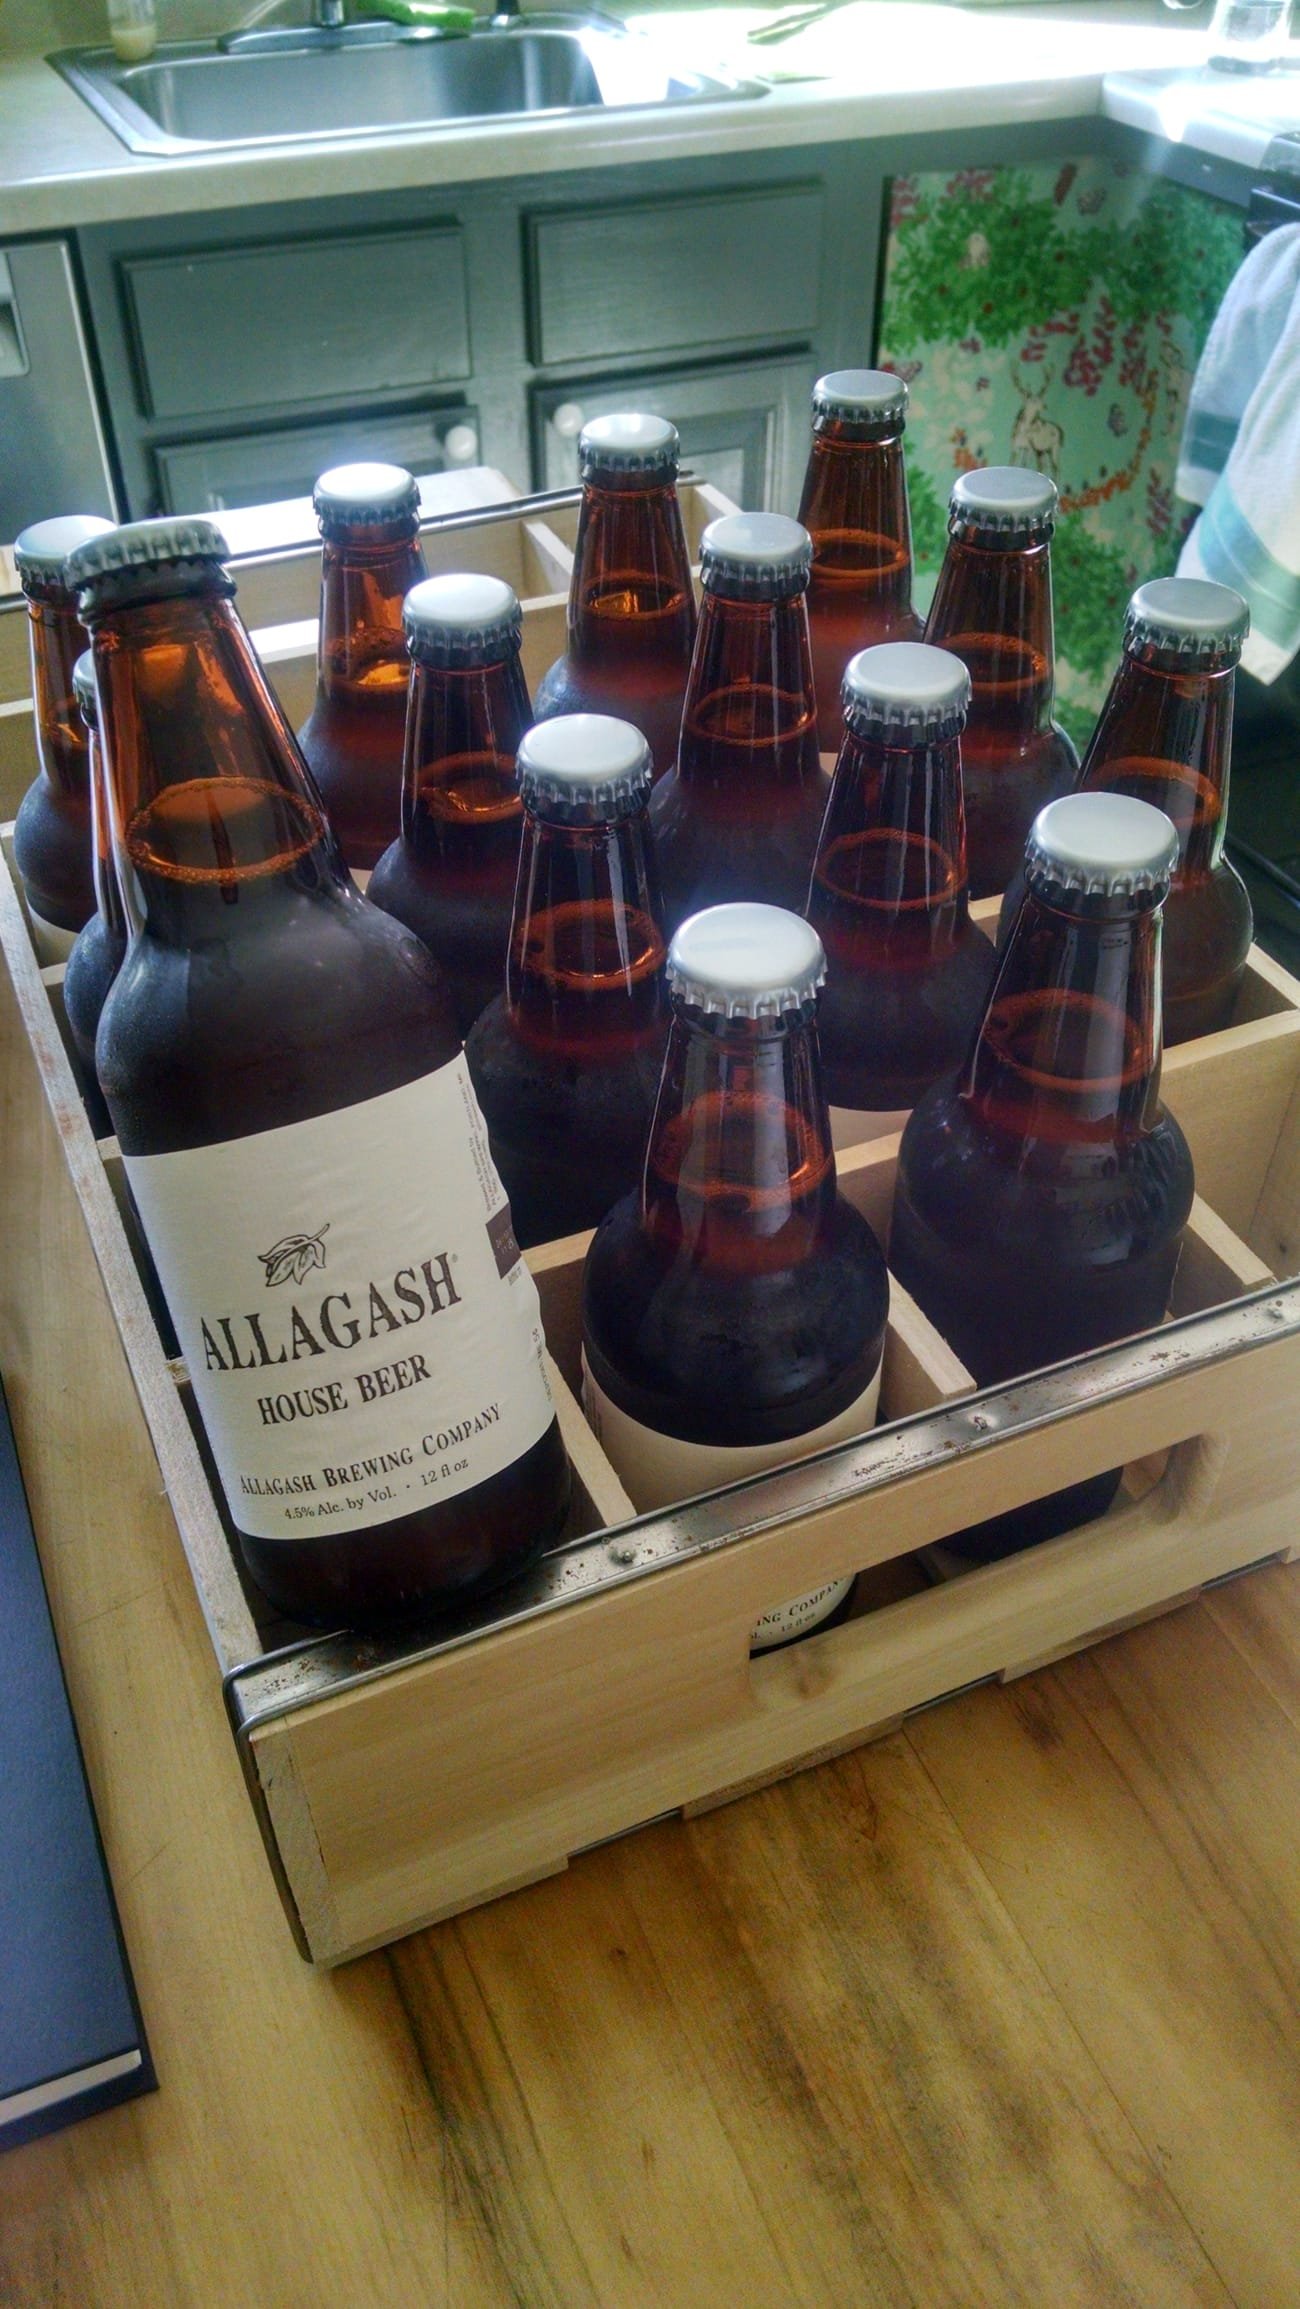 allgash house beer